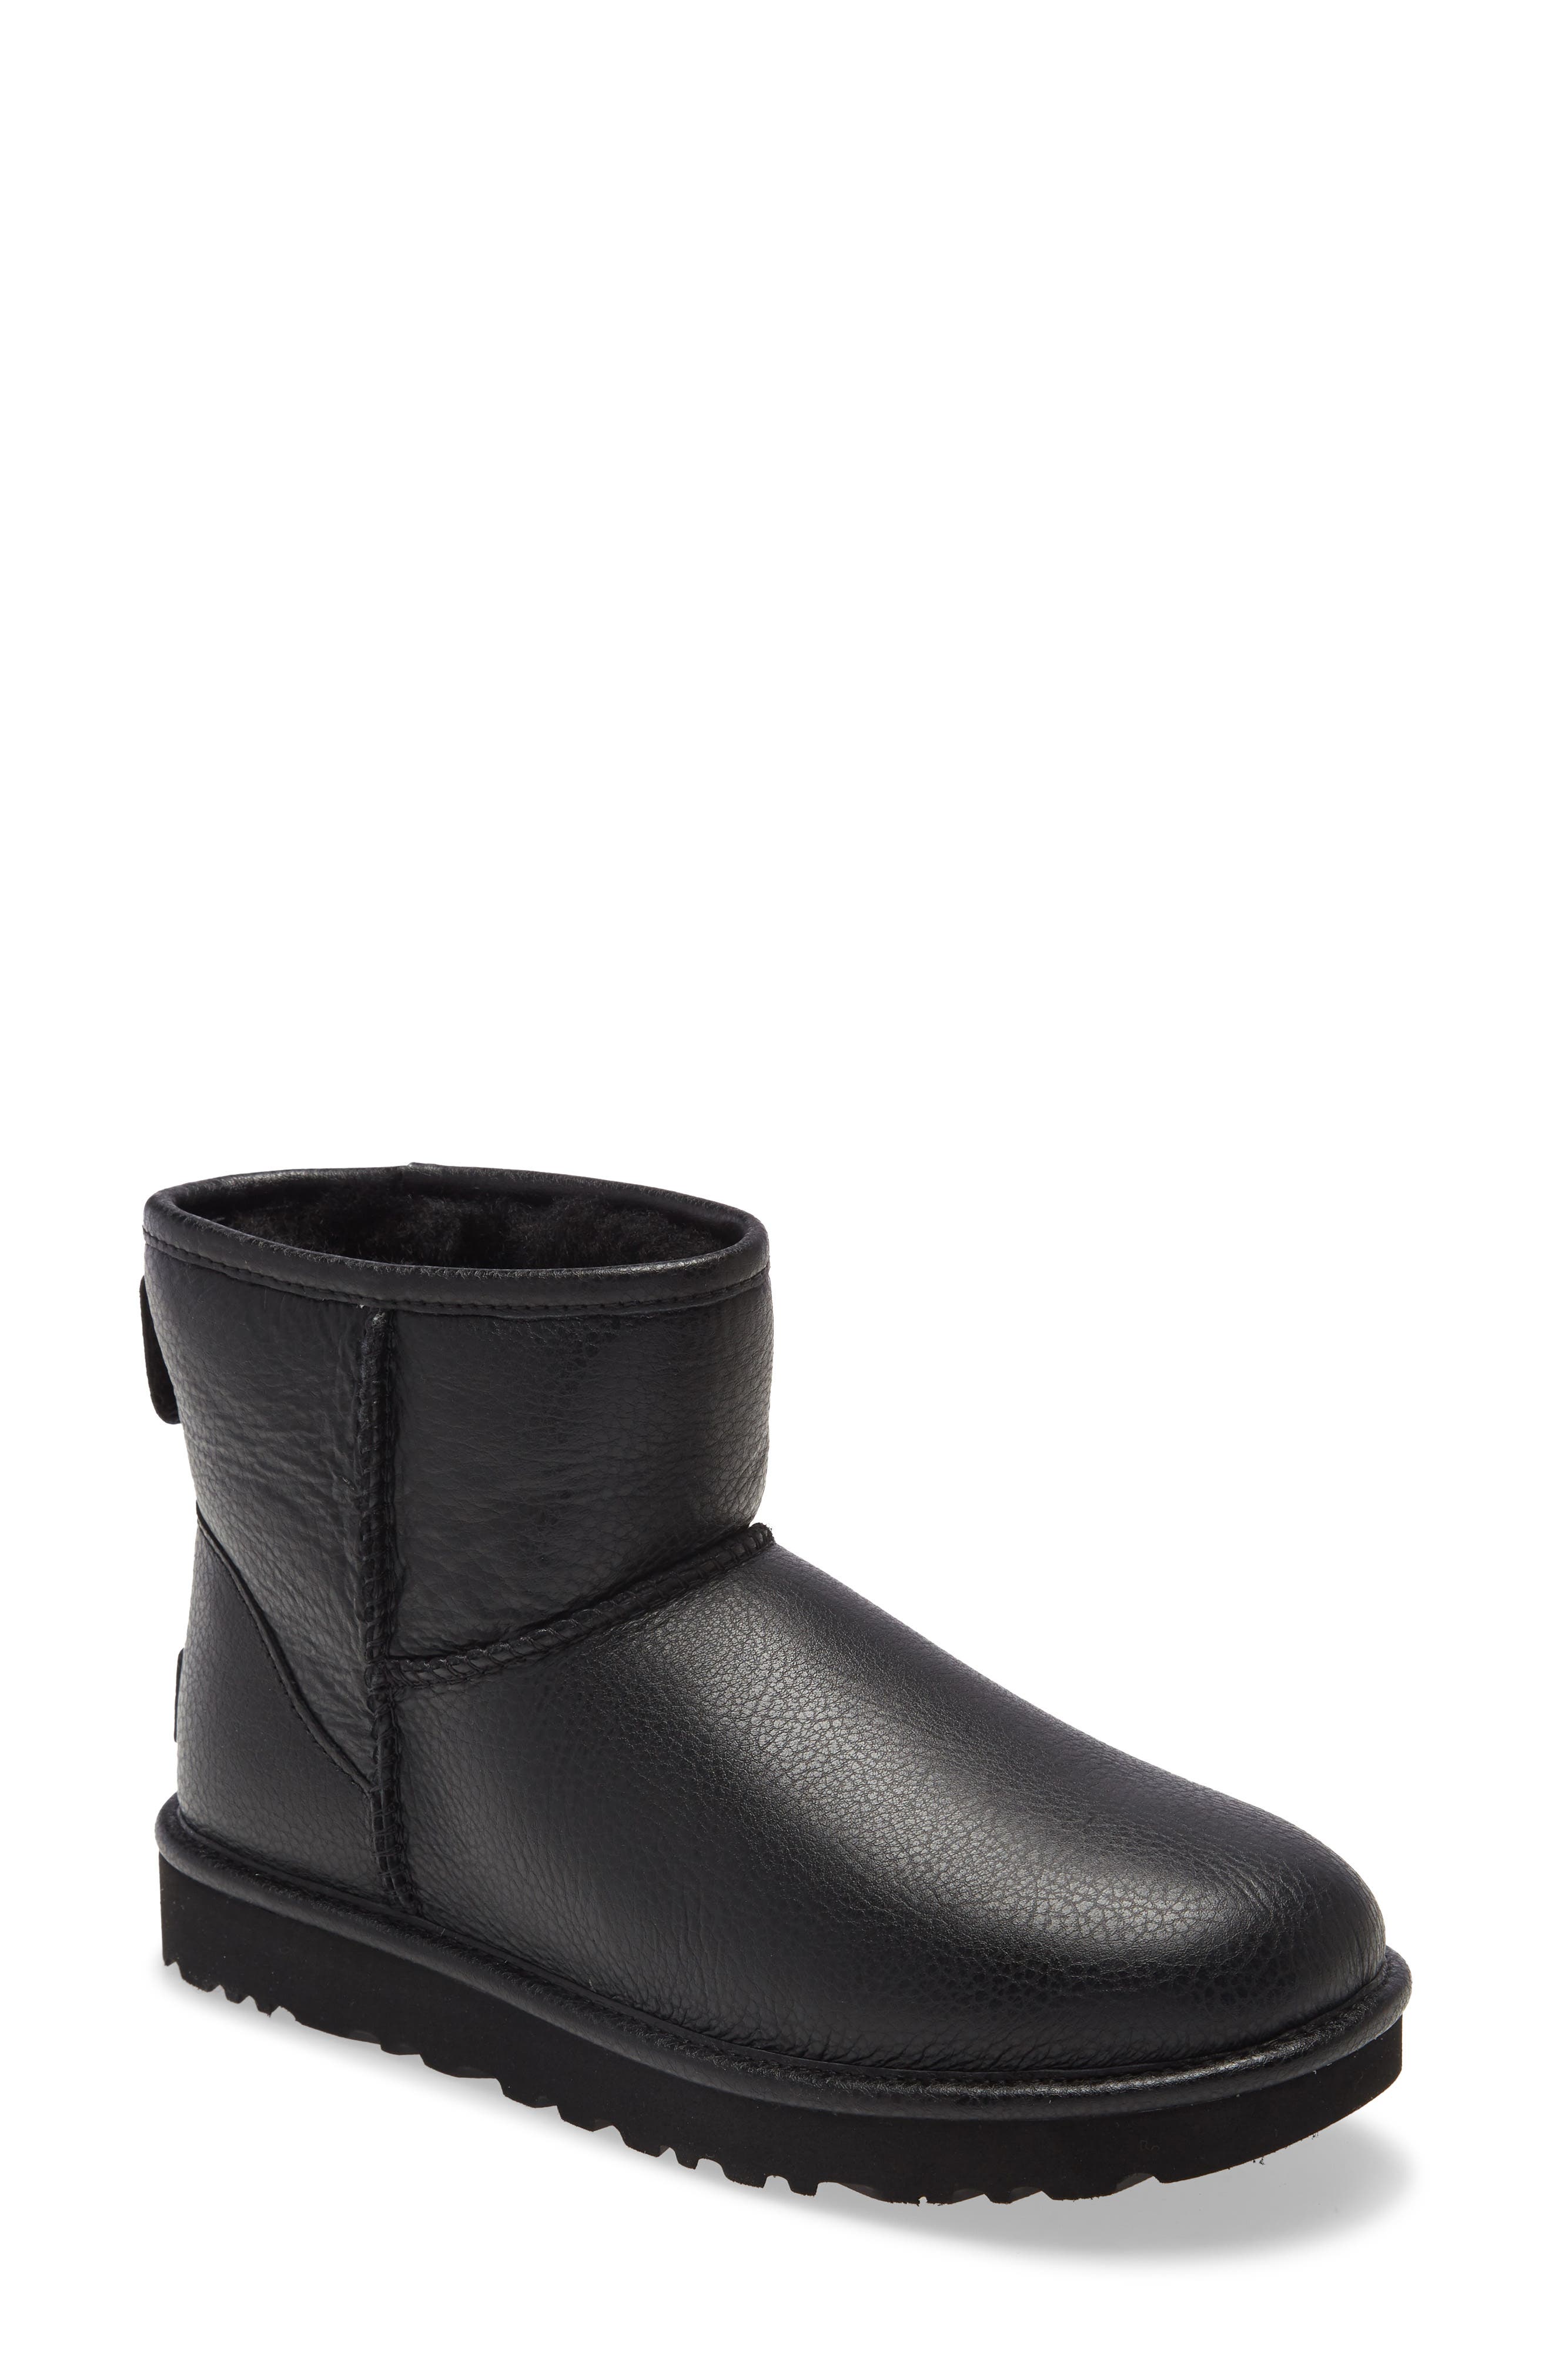 Ugg ® Classic Mini Ii Genuine Shearling Lined Boot In Black Leather